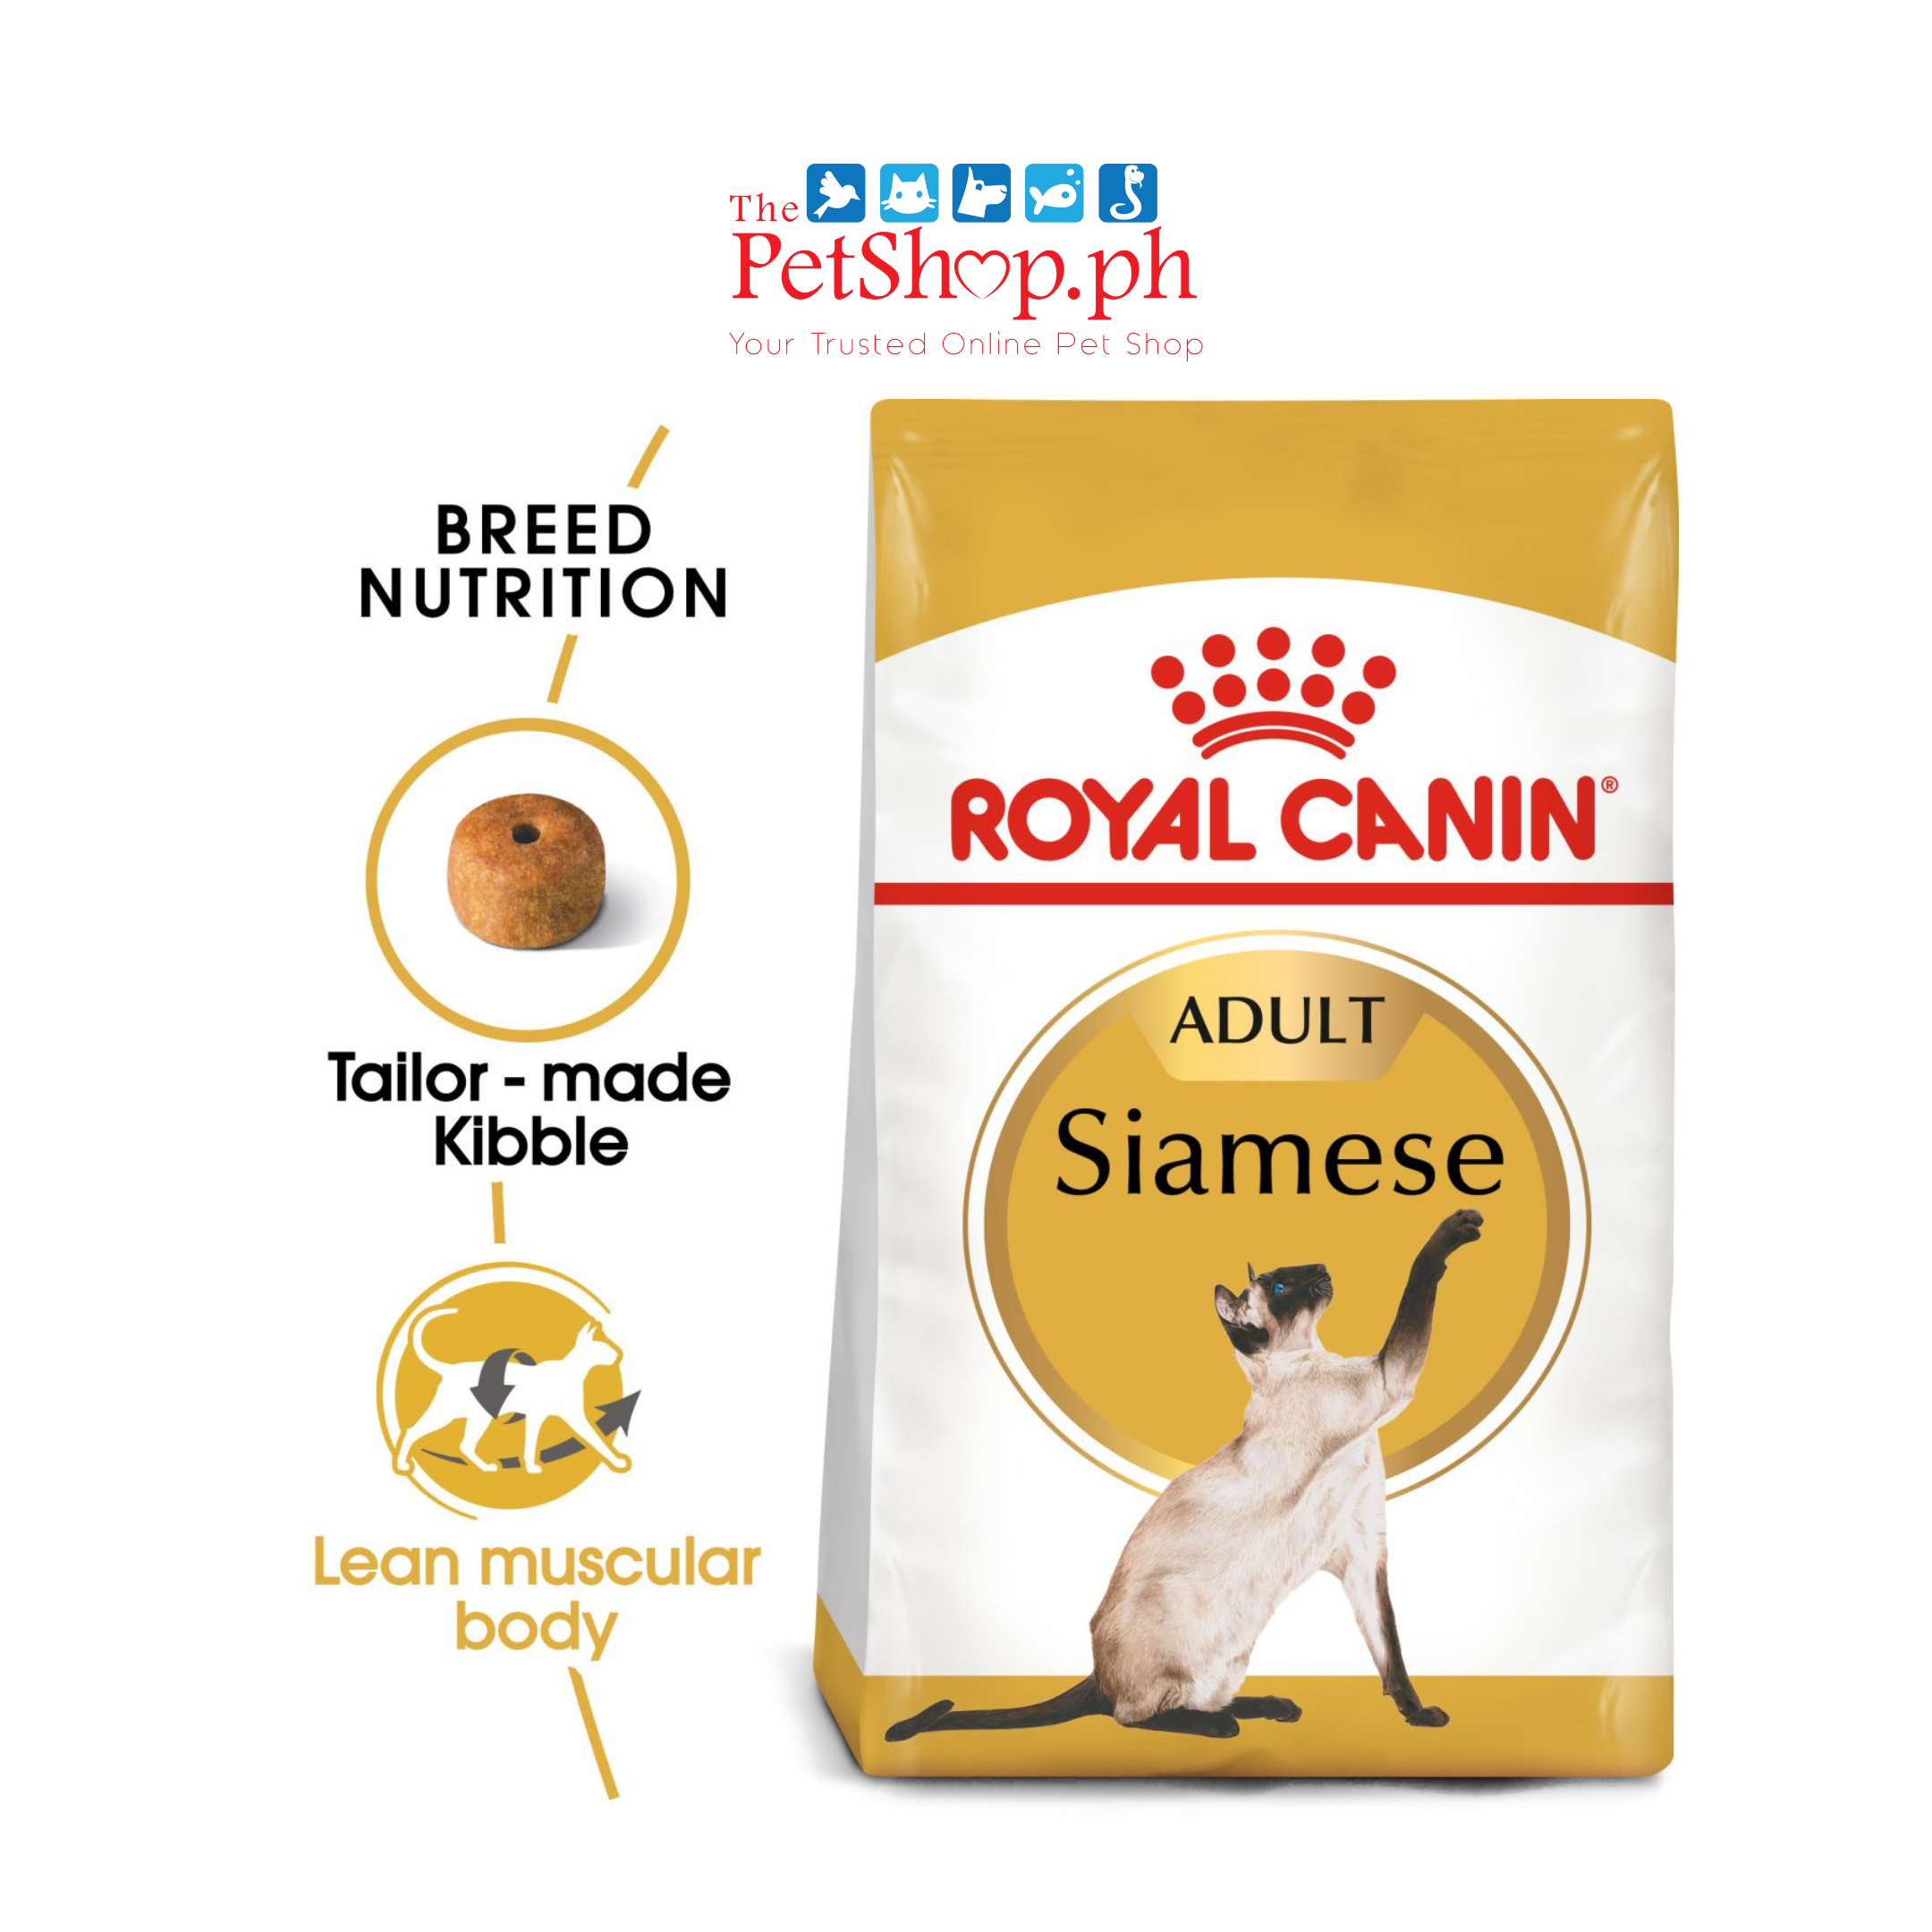 Royal Canin F Siamese 2kg Adult Dry Cat Food Feline Breed Nutrition